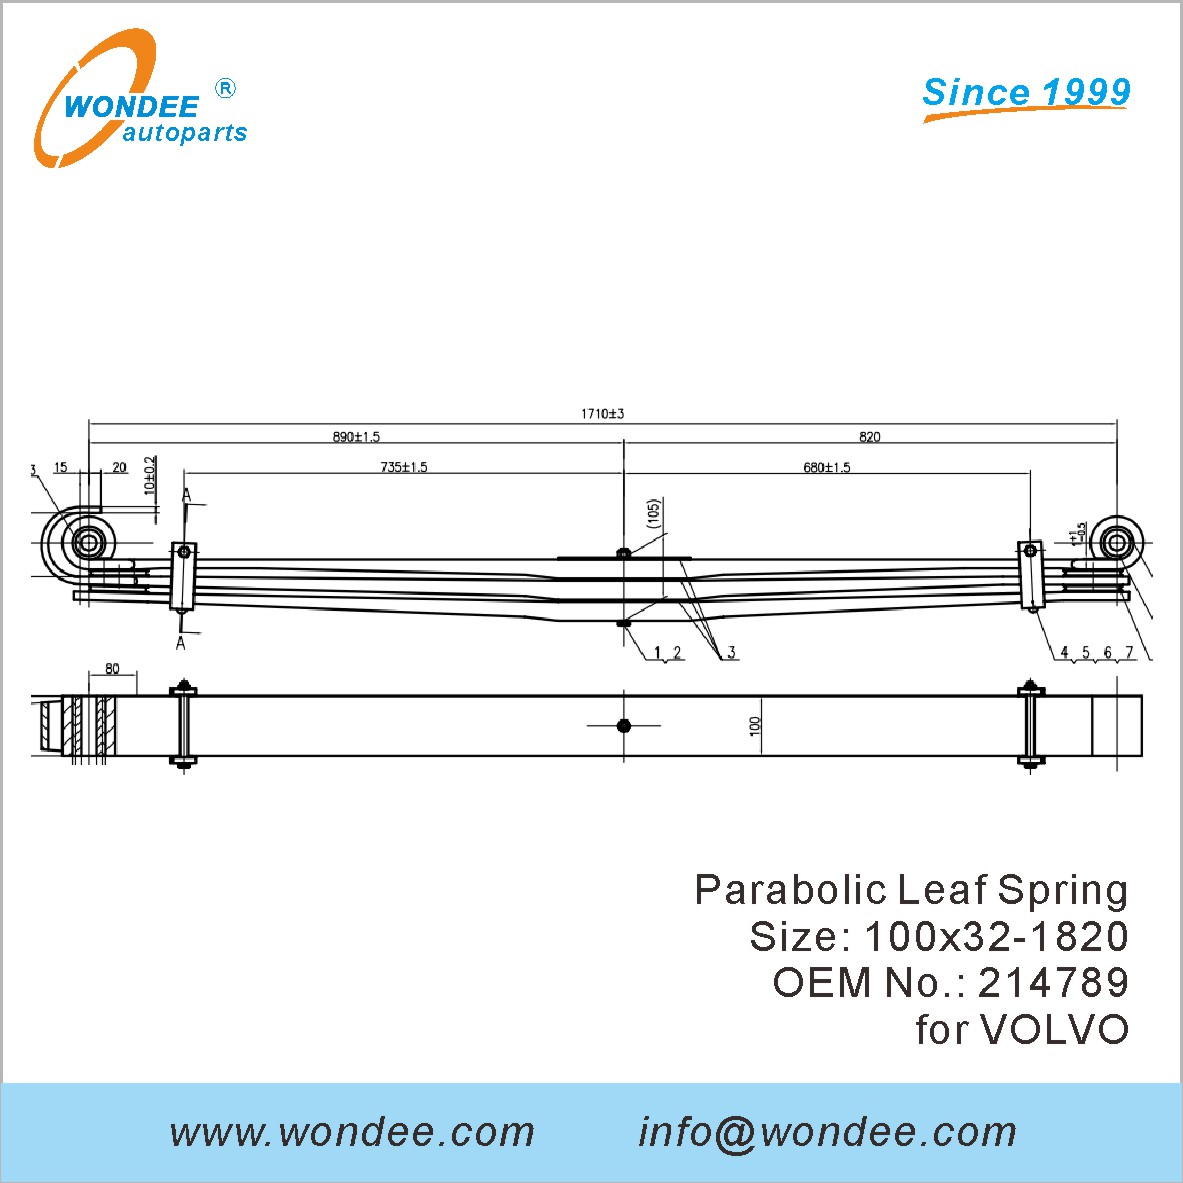 WONDEE heavy duty parabolic Leaf Spring OEM 214789 for VOLVO